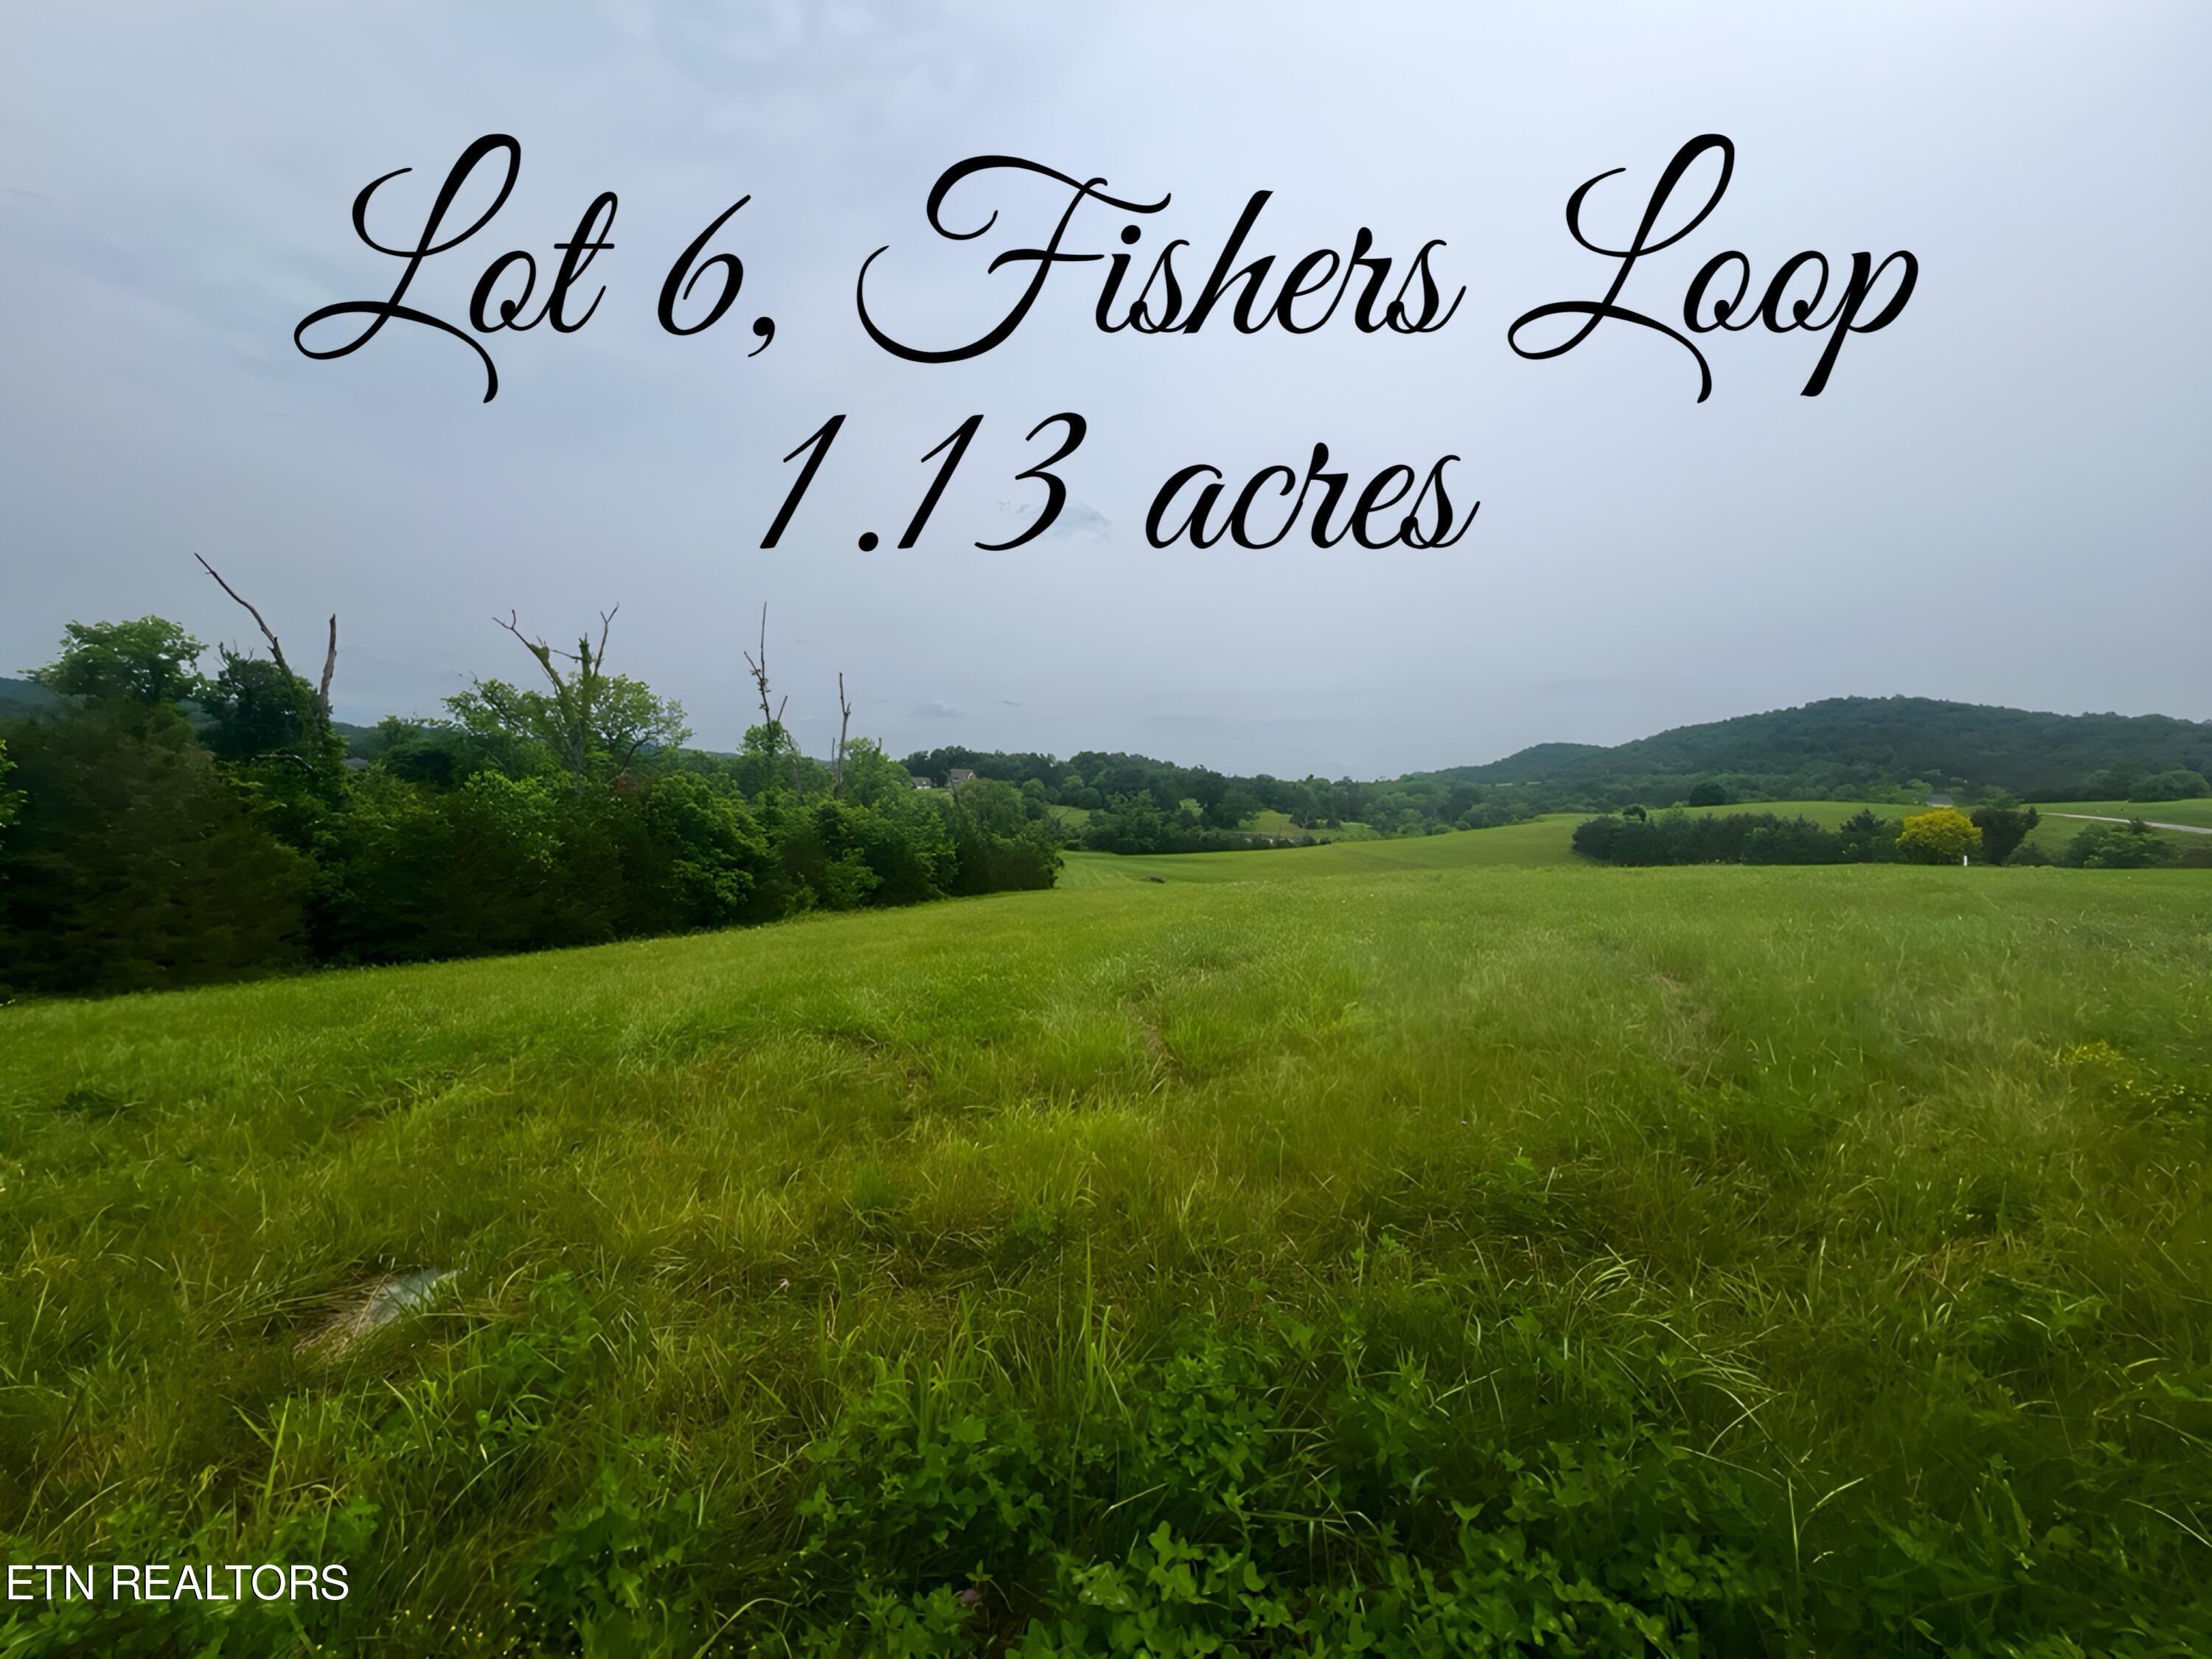 1. Lot 6 Fishers Loop